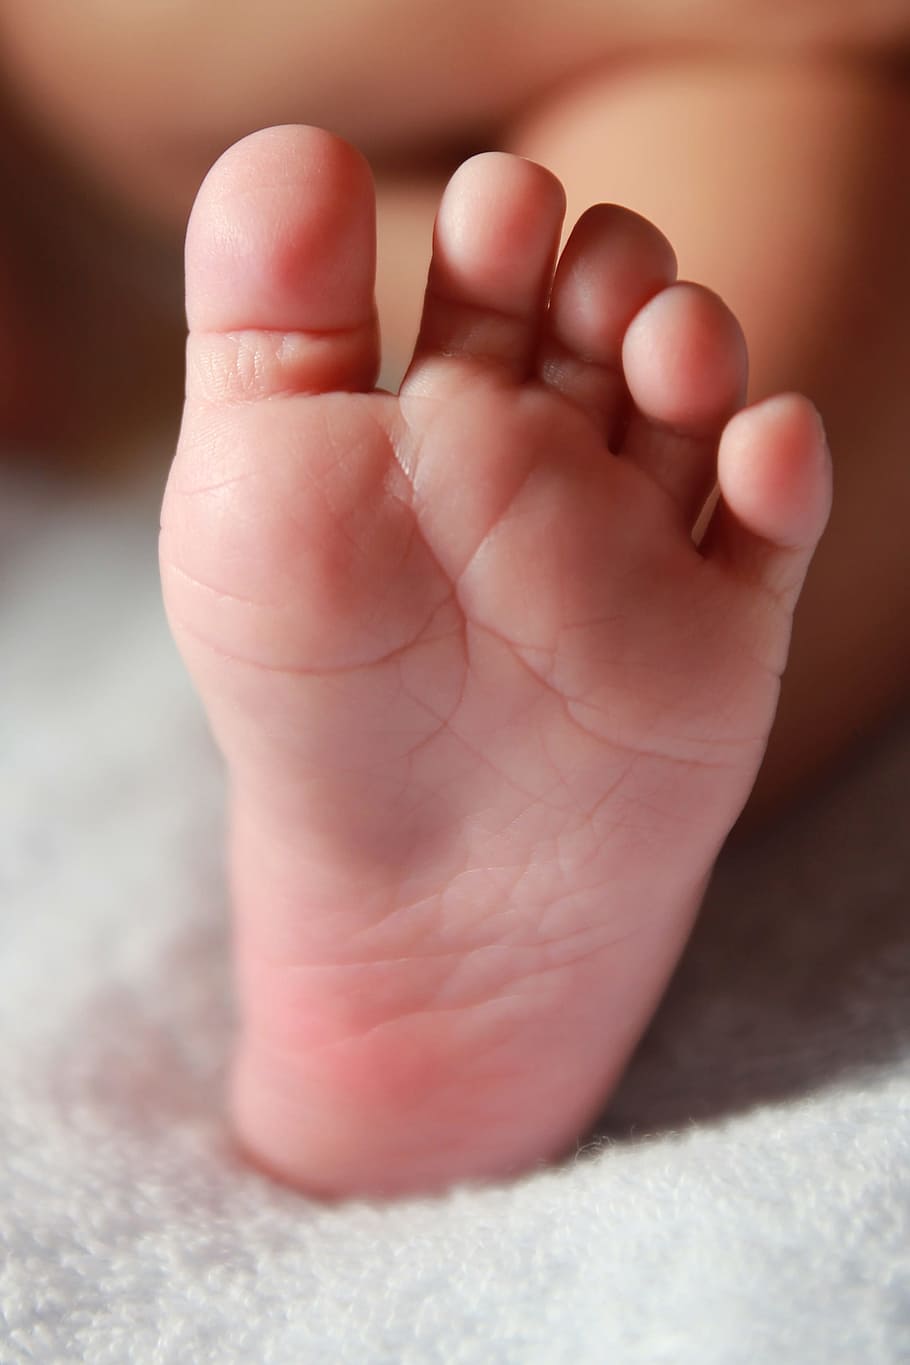 left person's foot, Newborn, Infant, Leg, baby foot, newborn, infant, baby, child, small, childhood